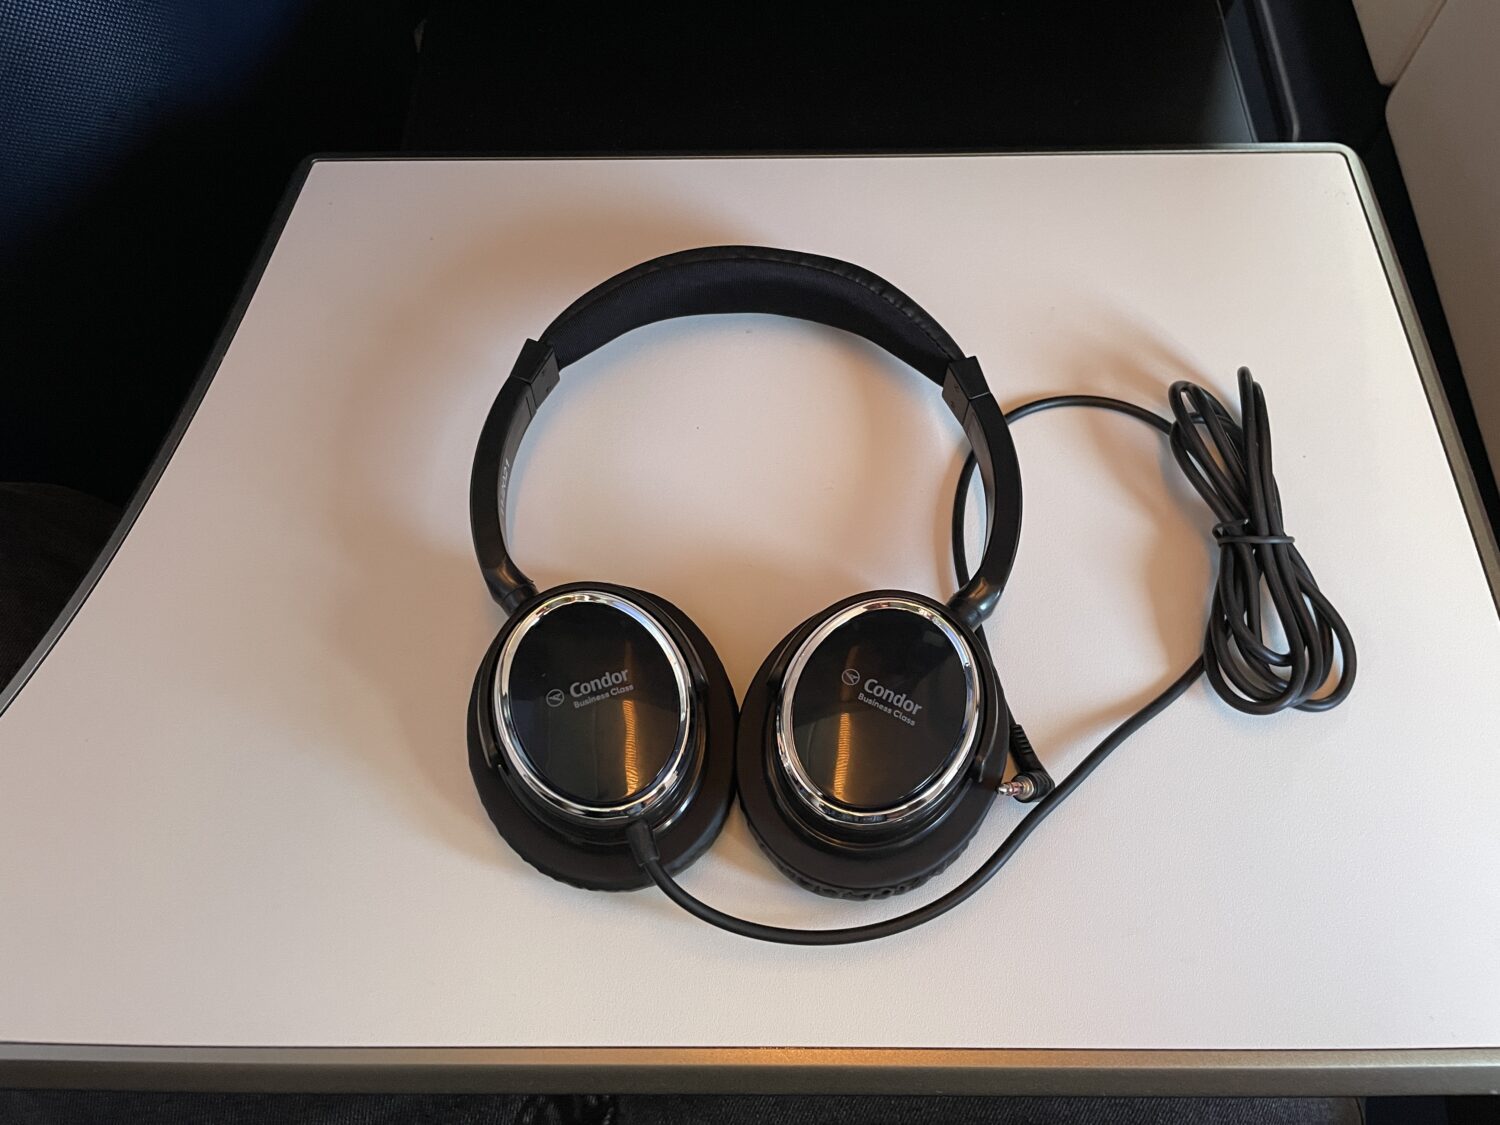 Condor Airlines Business Class Headphones